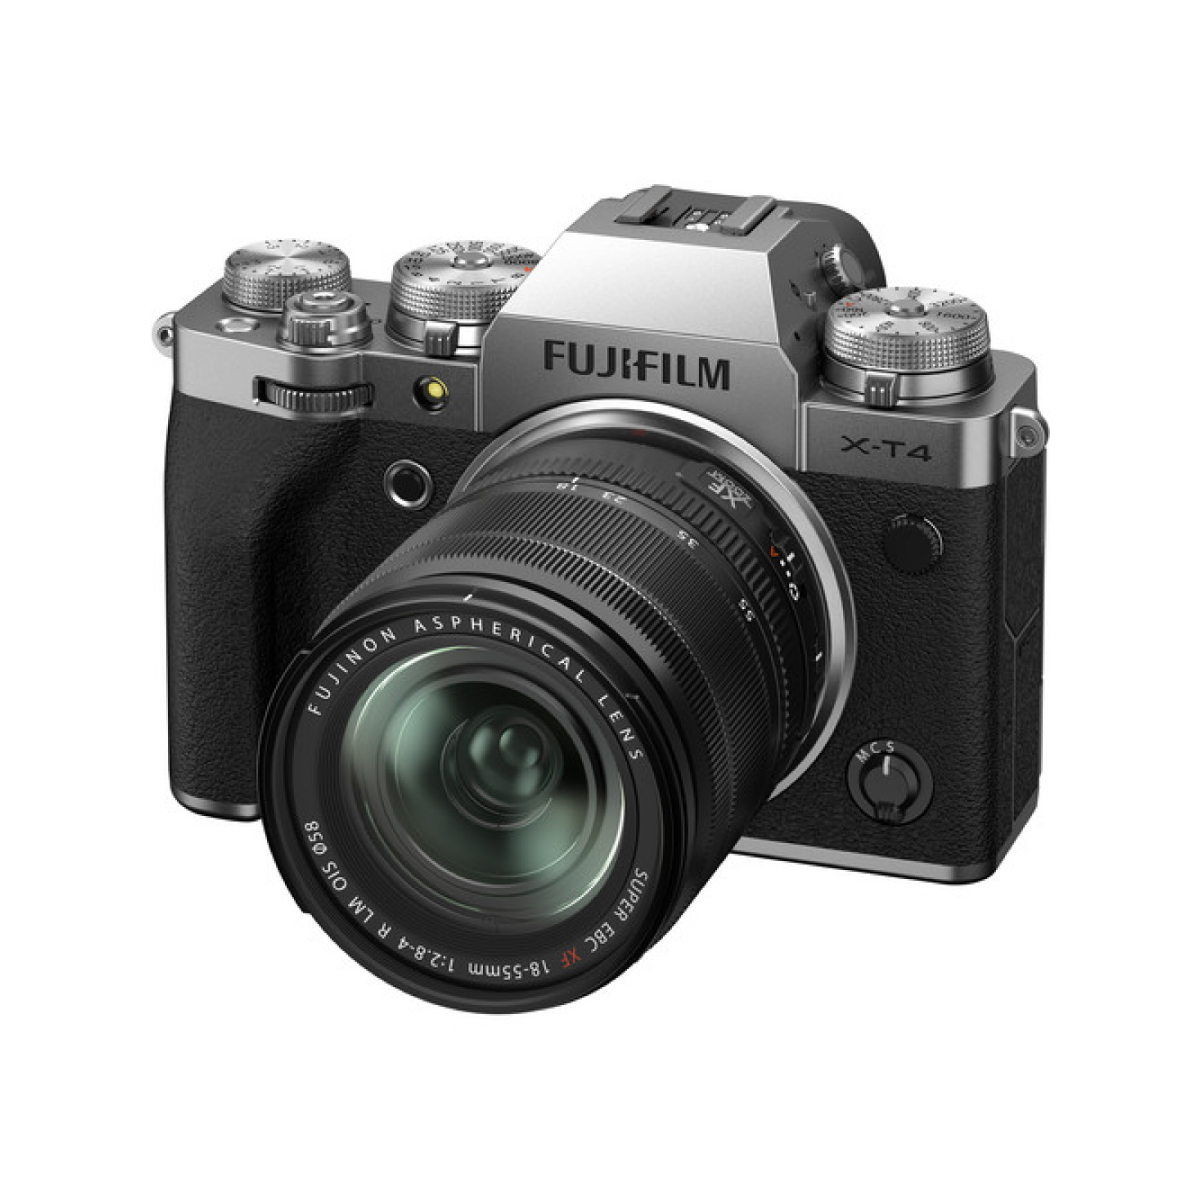 Fujifilm X-T4 26MP Mirrorless Camera Body with XF18-55mm Lens – Silver (7)